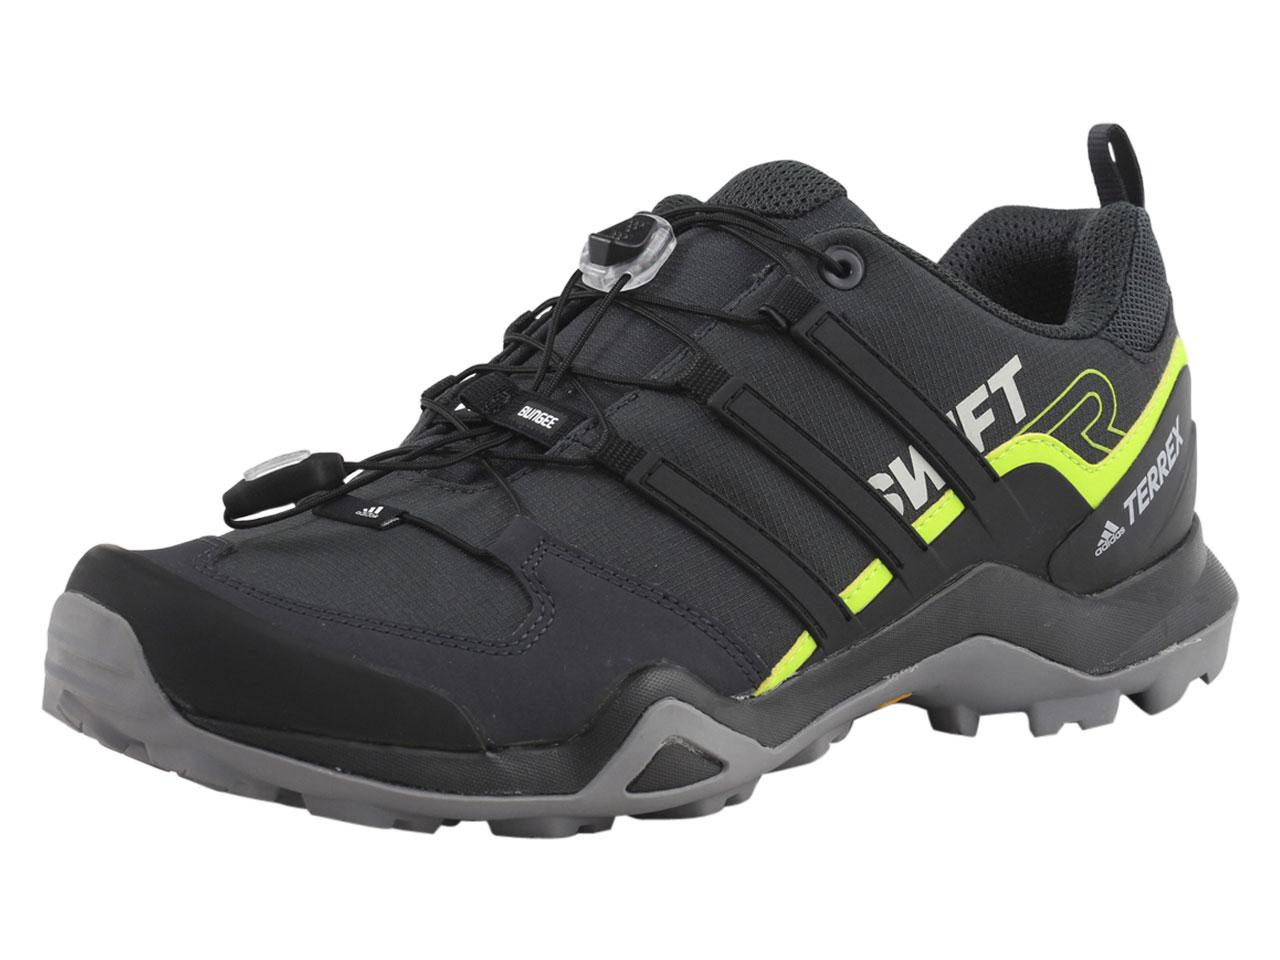 Adidas Men's Terrex Swift R2 Hiking Sneakers Shoes - Carbon/Black/Grey Three - 8 D(M) US